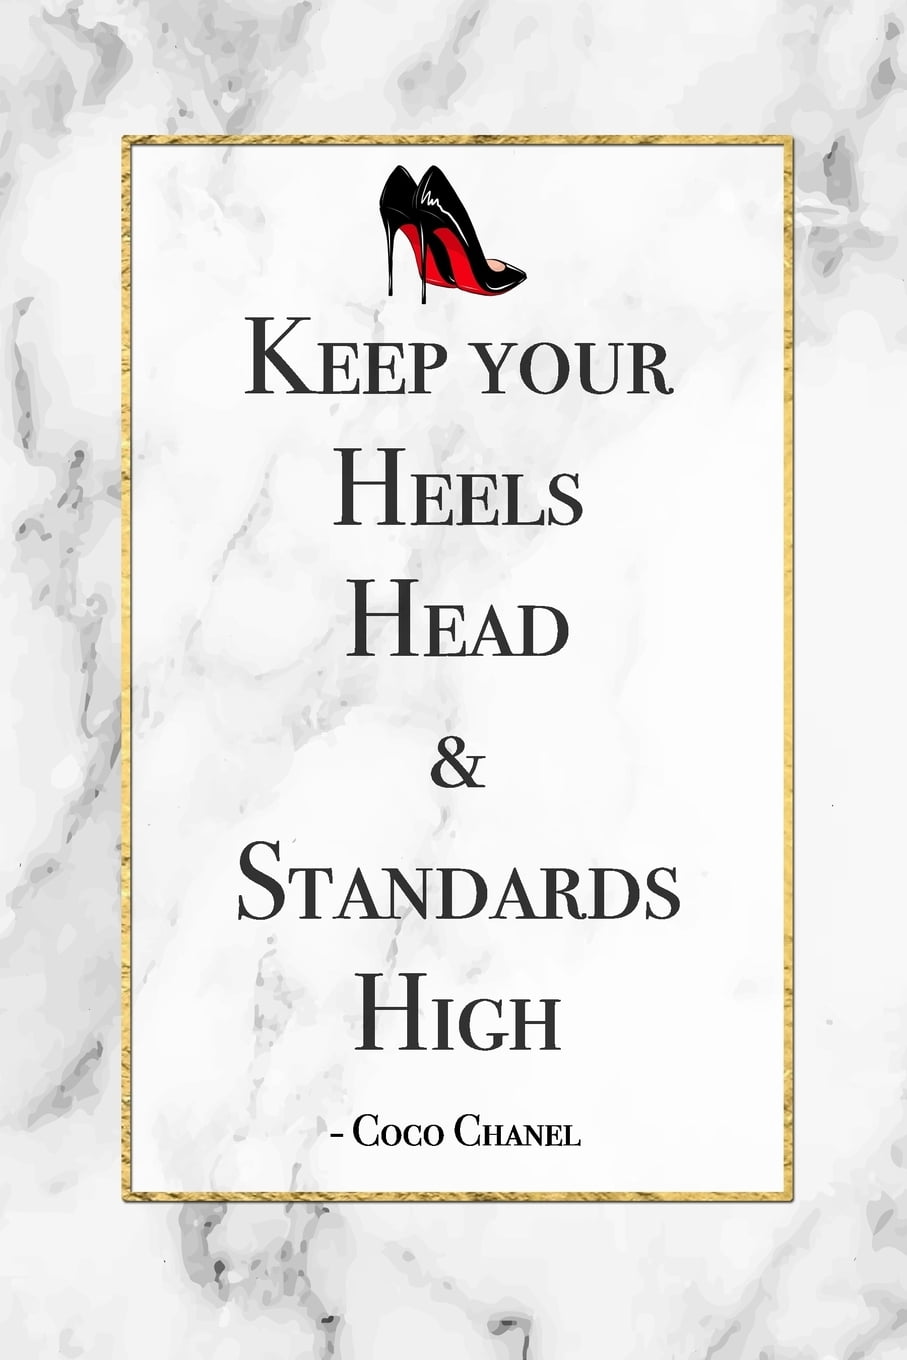 Keep your heels, head & standards high- Coco Chanel